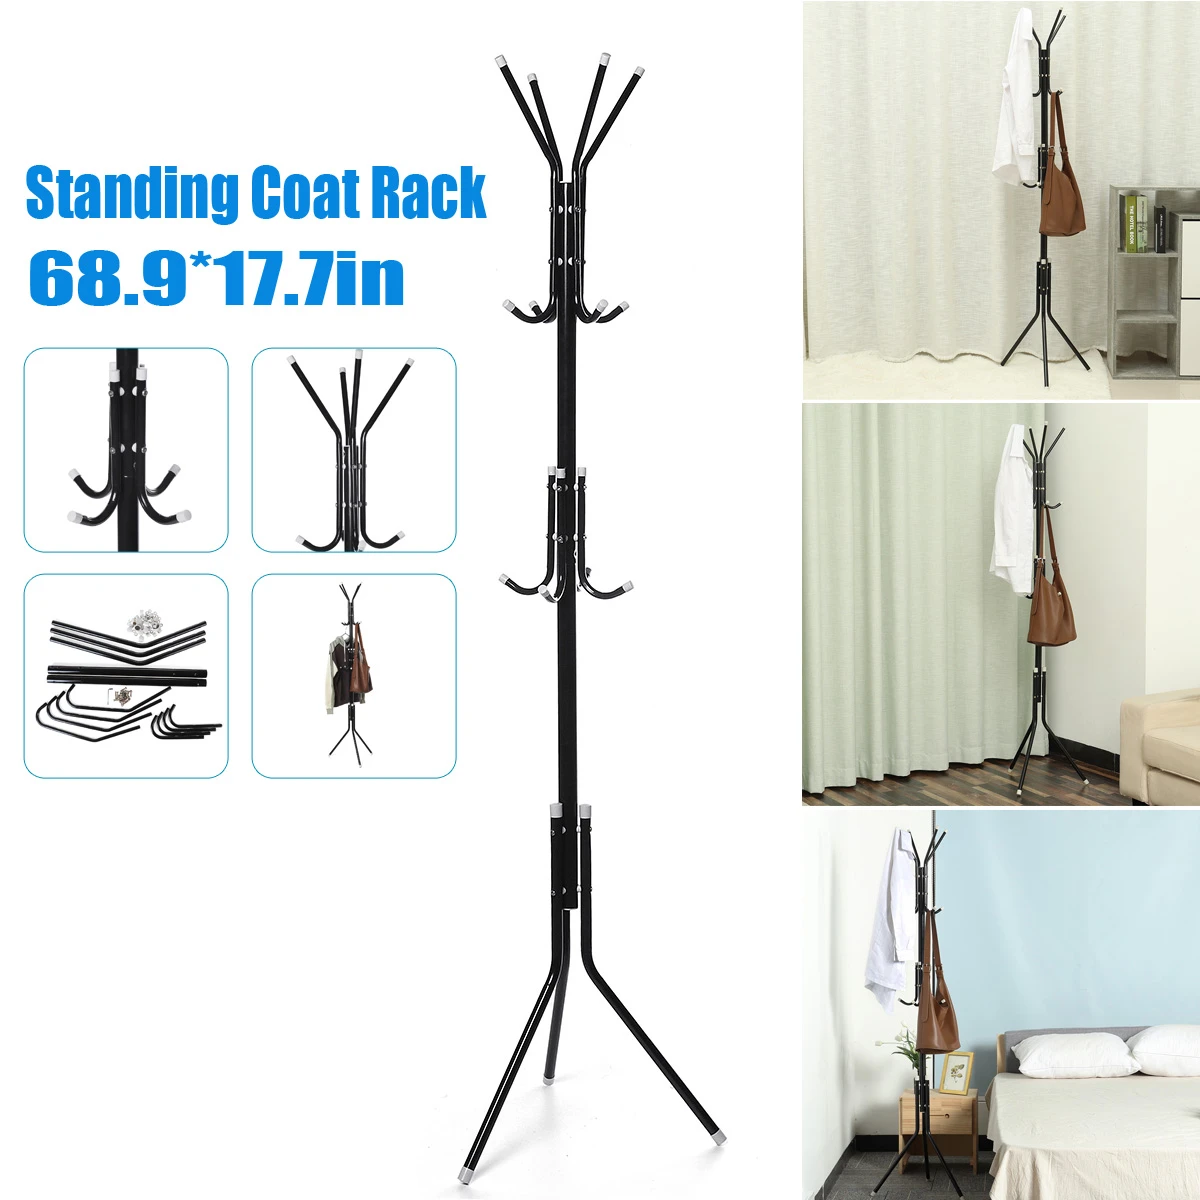 Metal Coat/Hat/Jacket/Umbrella Stand Rack Tree Clothes Hanger Holder 12 Hooks